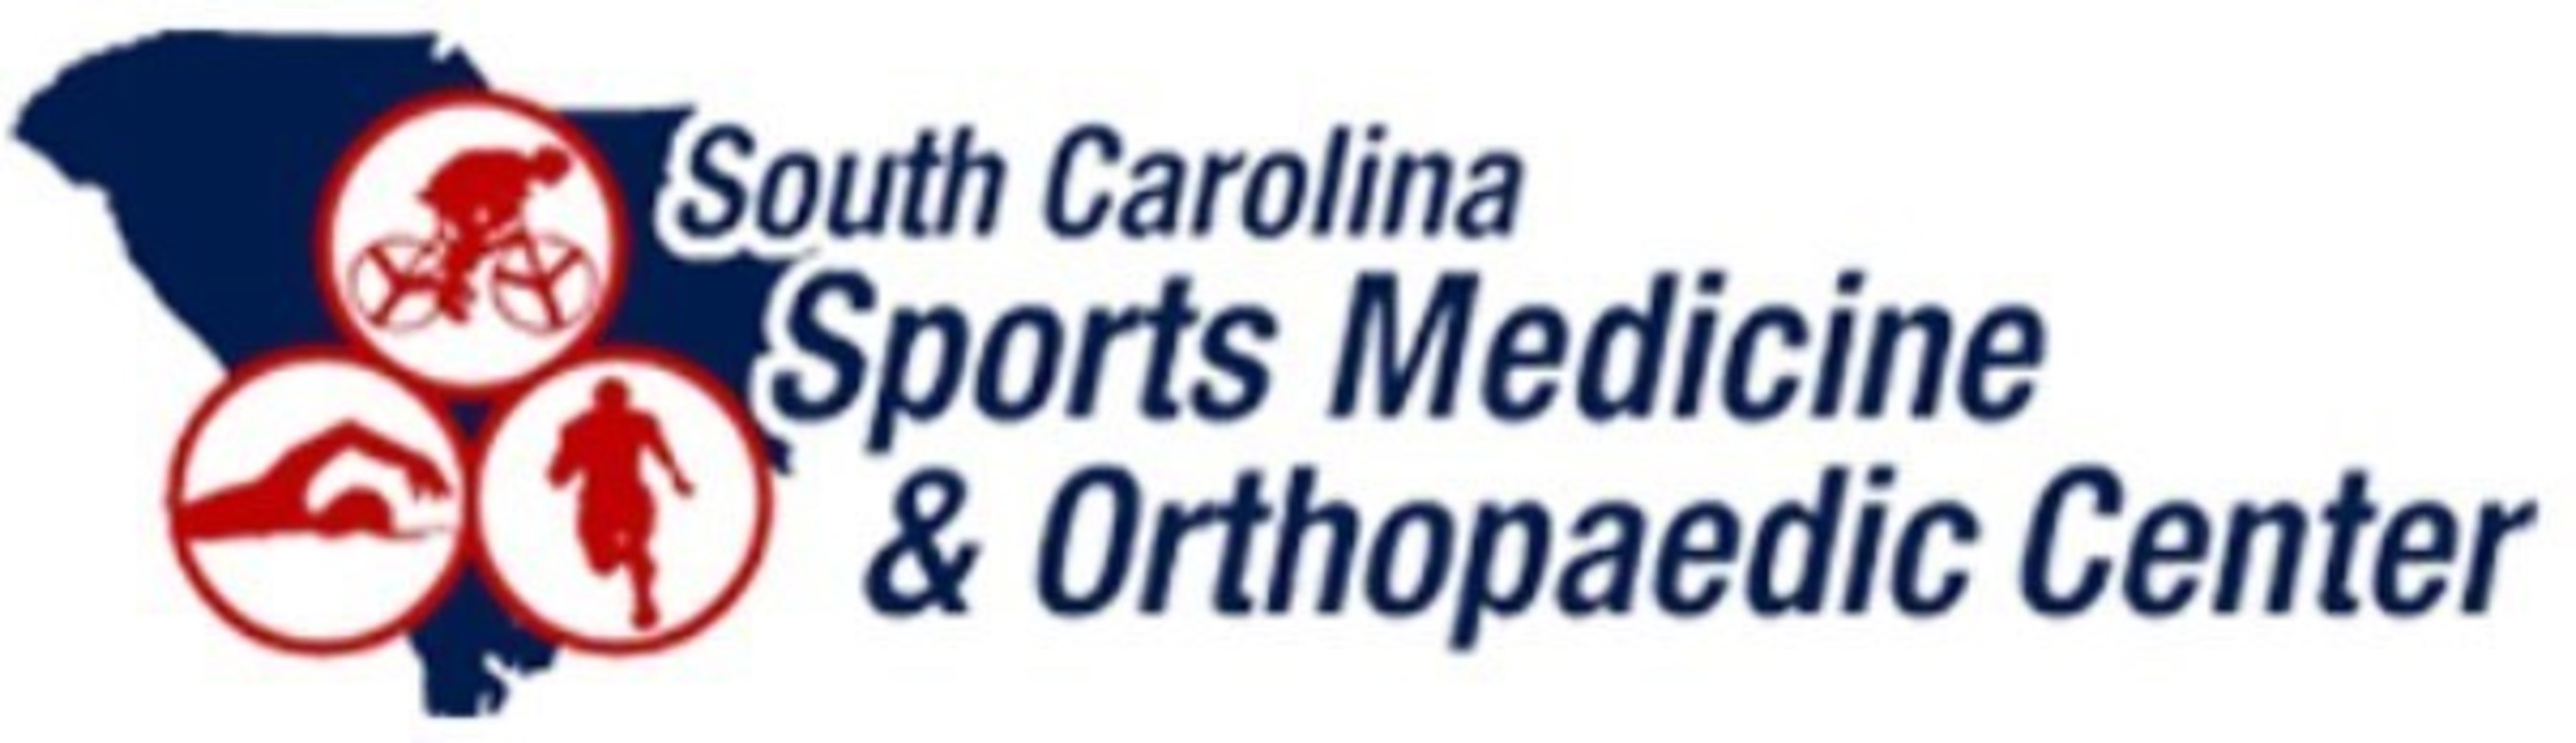 South Carolina Sports Medicine & Orthopedic Center